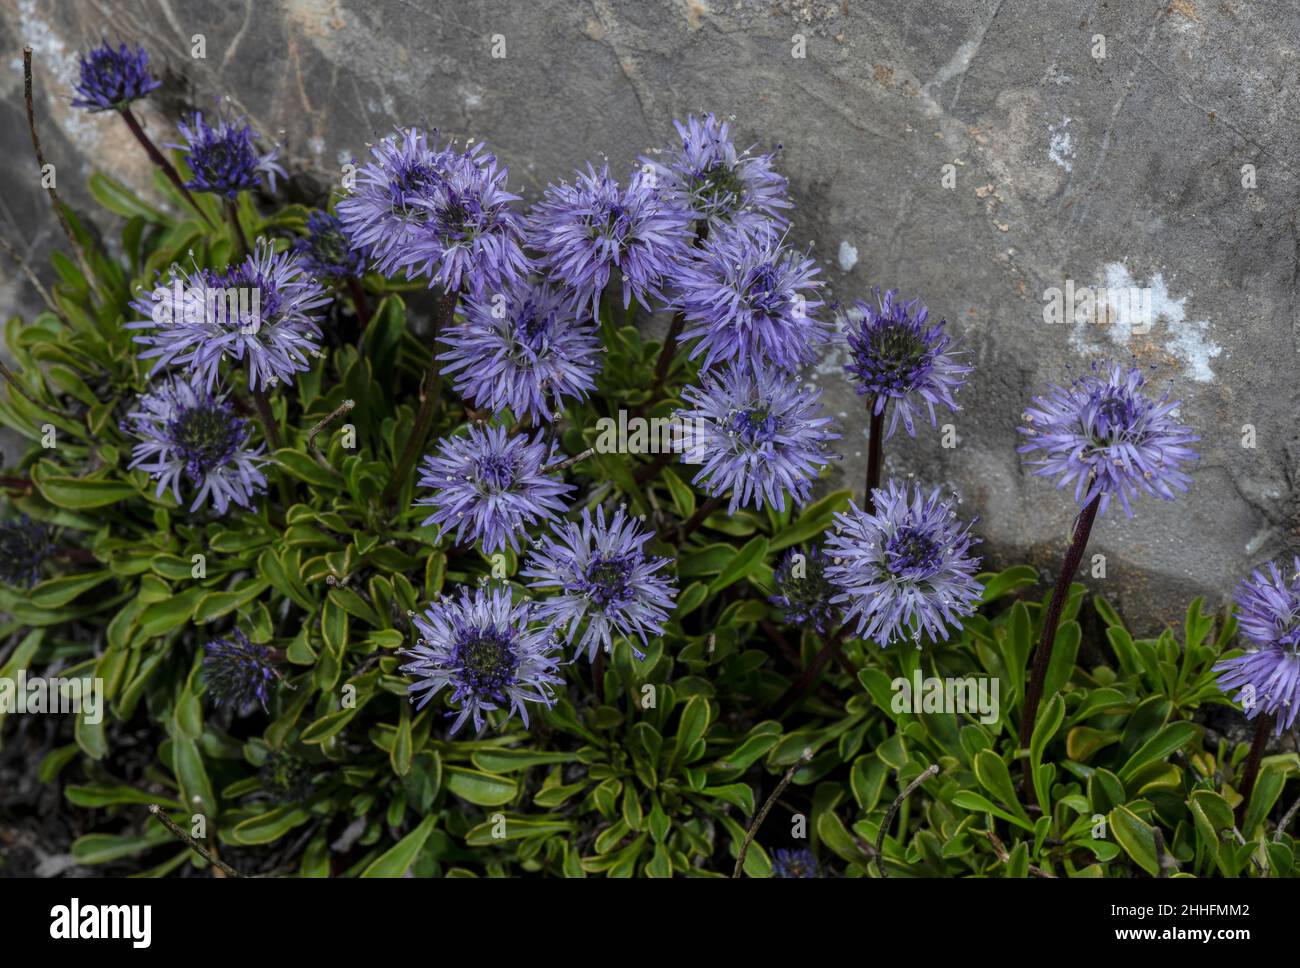 Matted Globularia, Globularia cordifolia in flower on limestone, Swiss Alps. Stock Photo